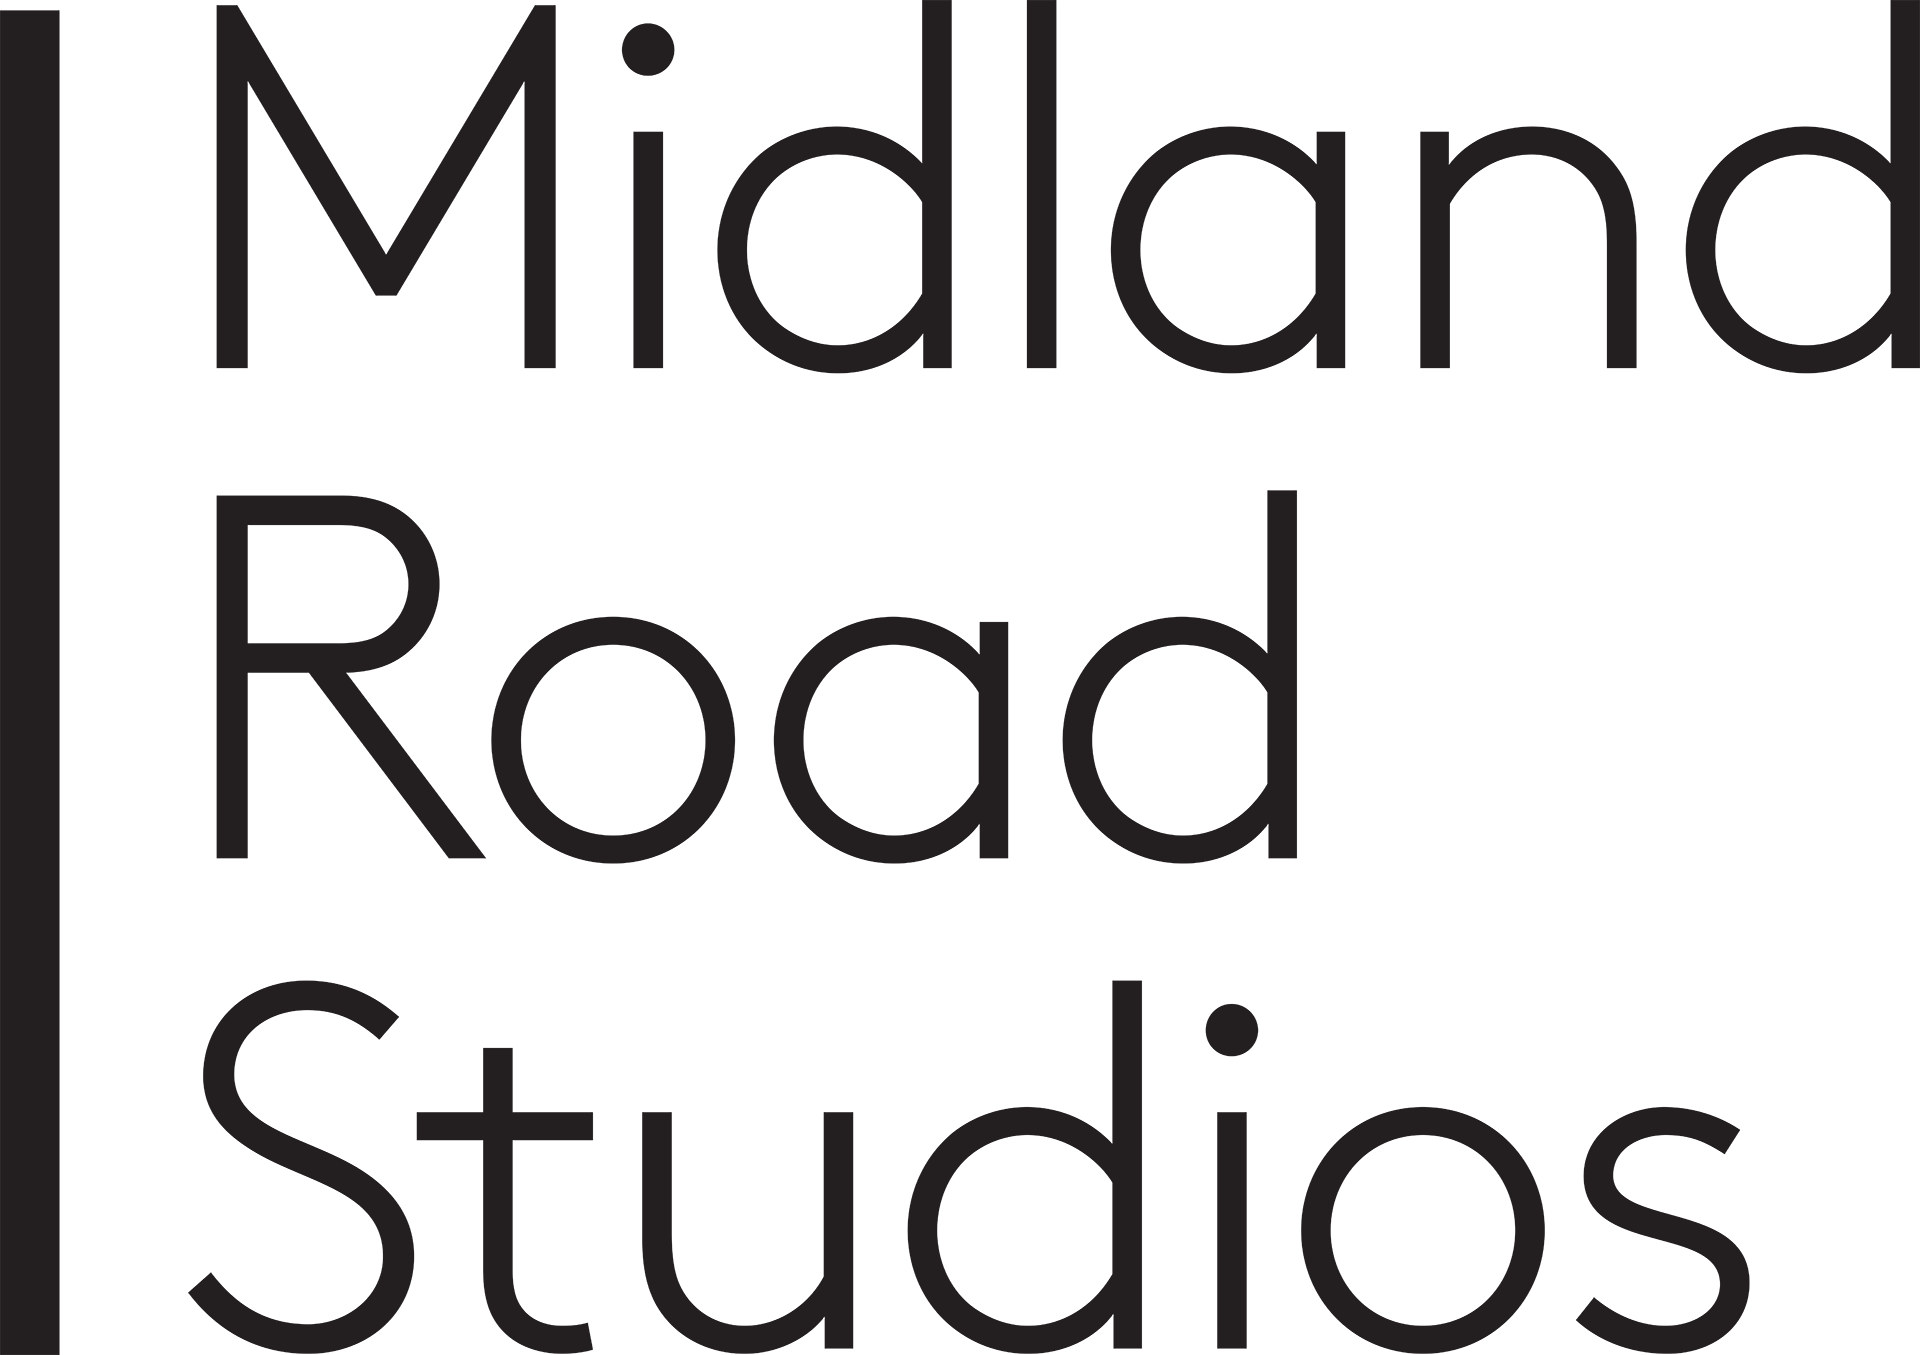 Midland Road Studios